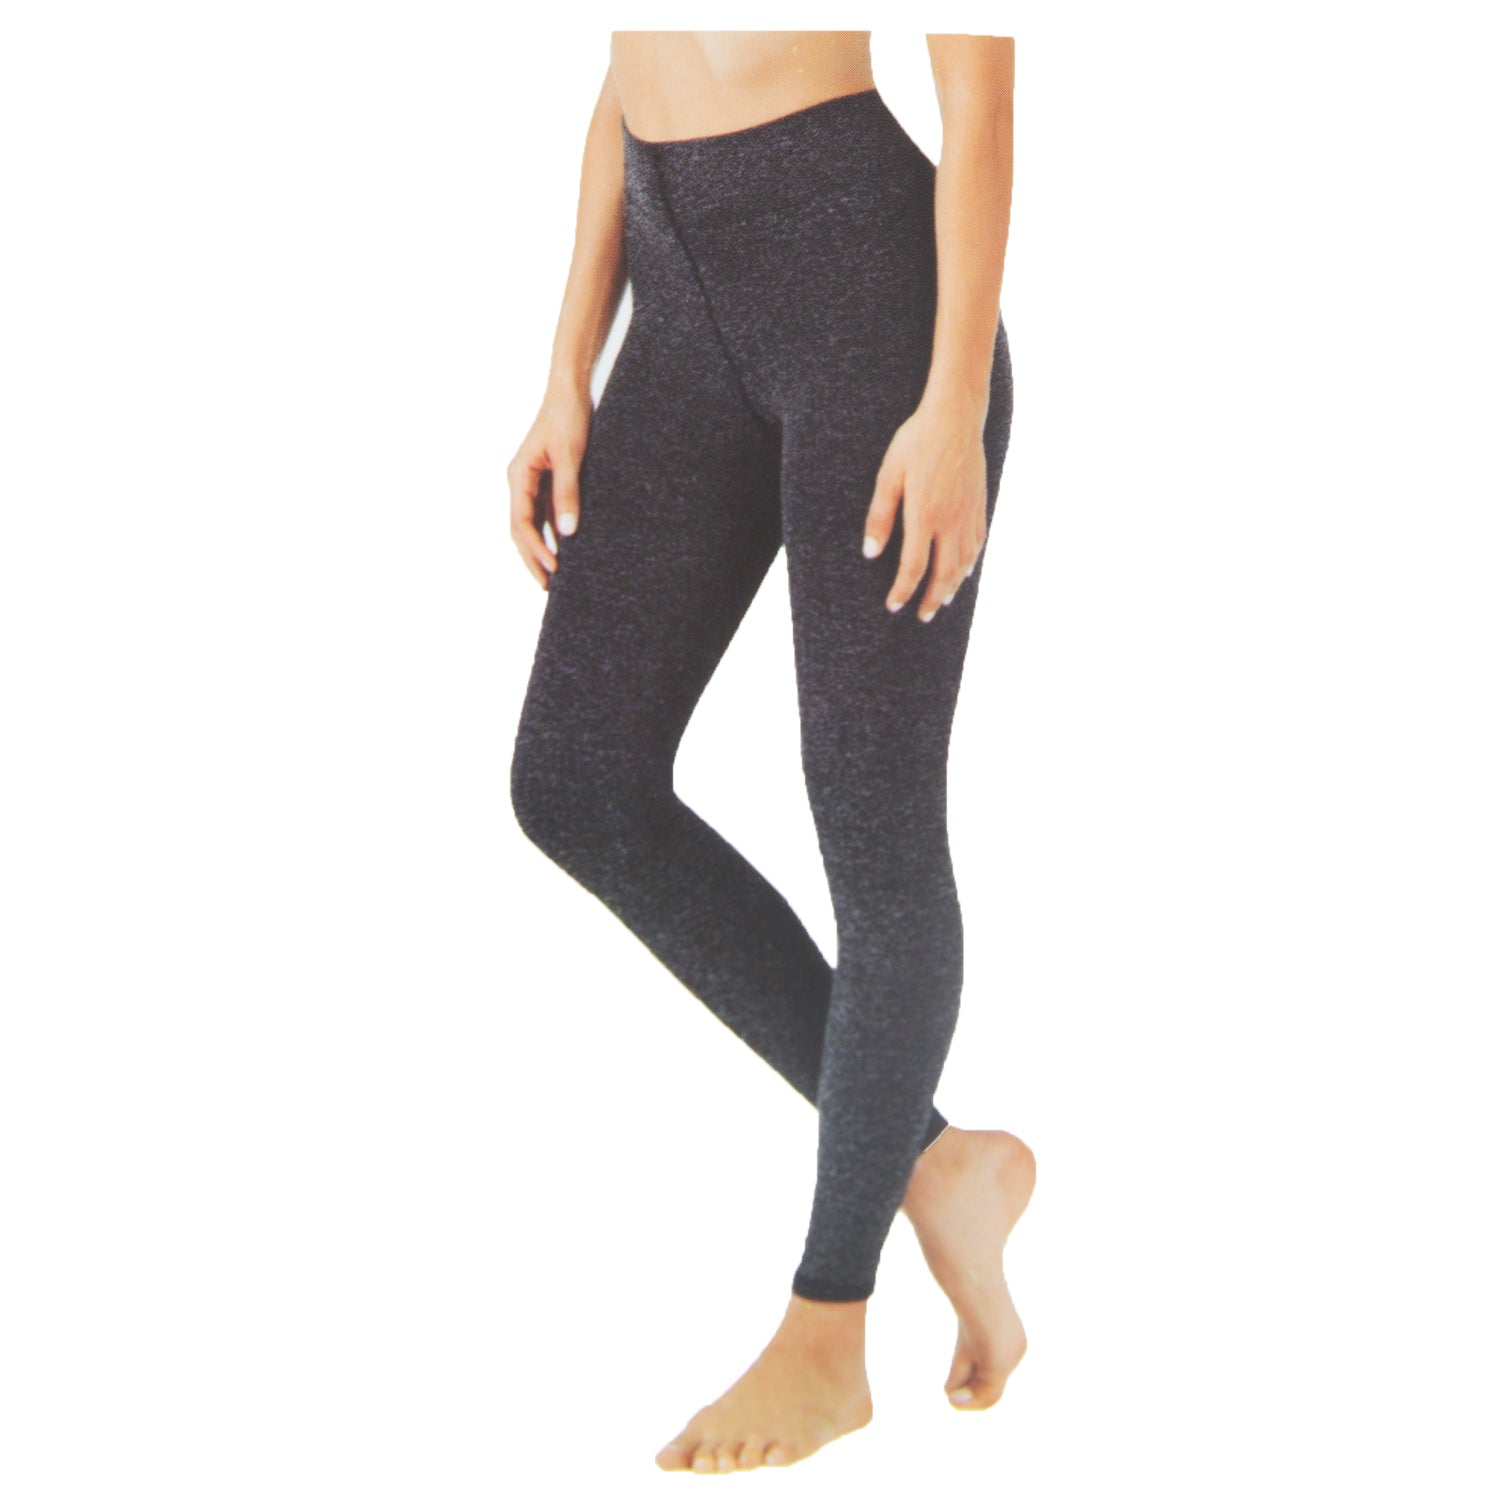 Women's Fleece Pants Tights Leggings Fleece lined Heath Grey Black